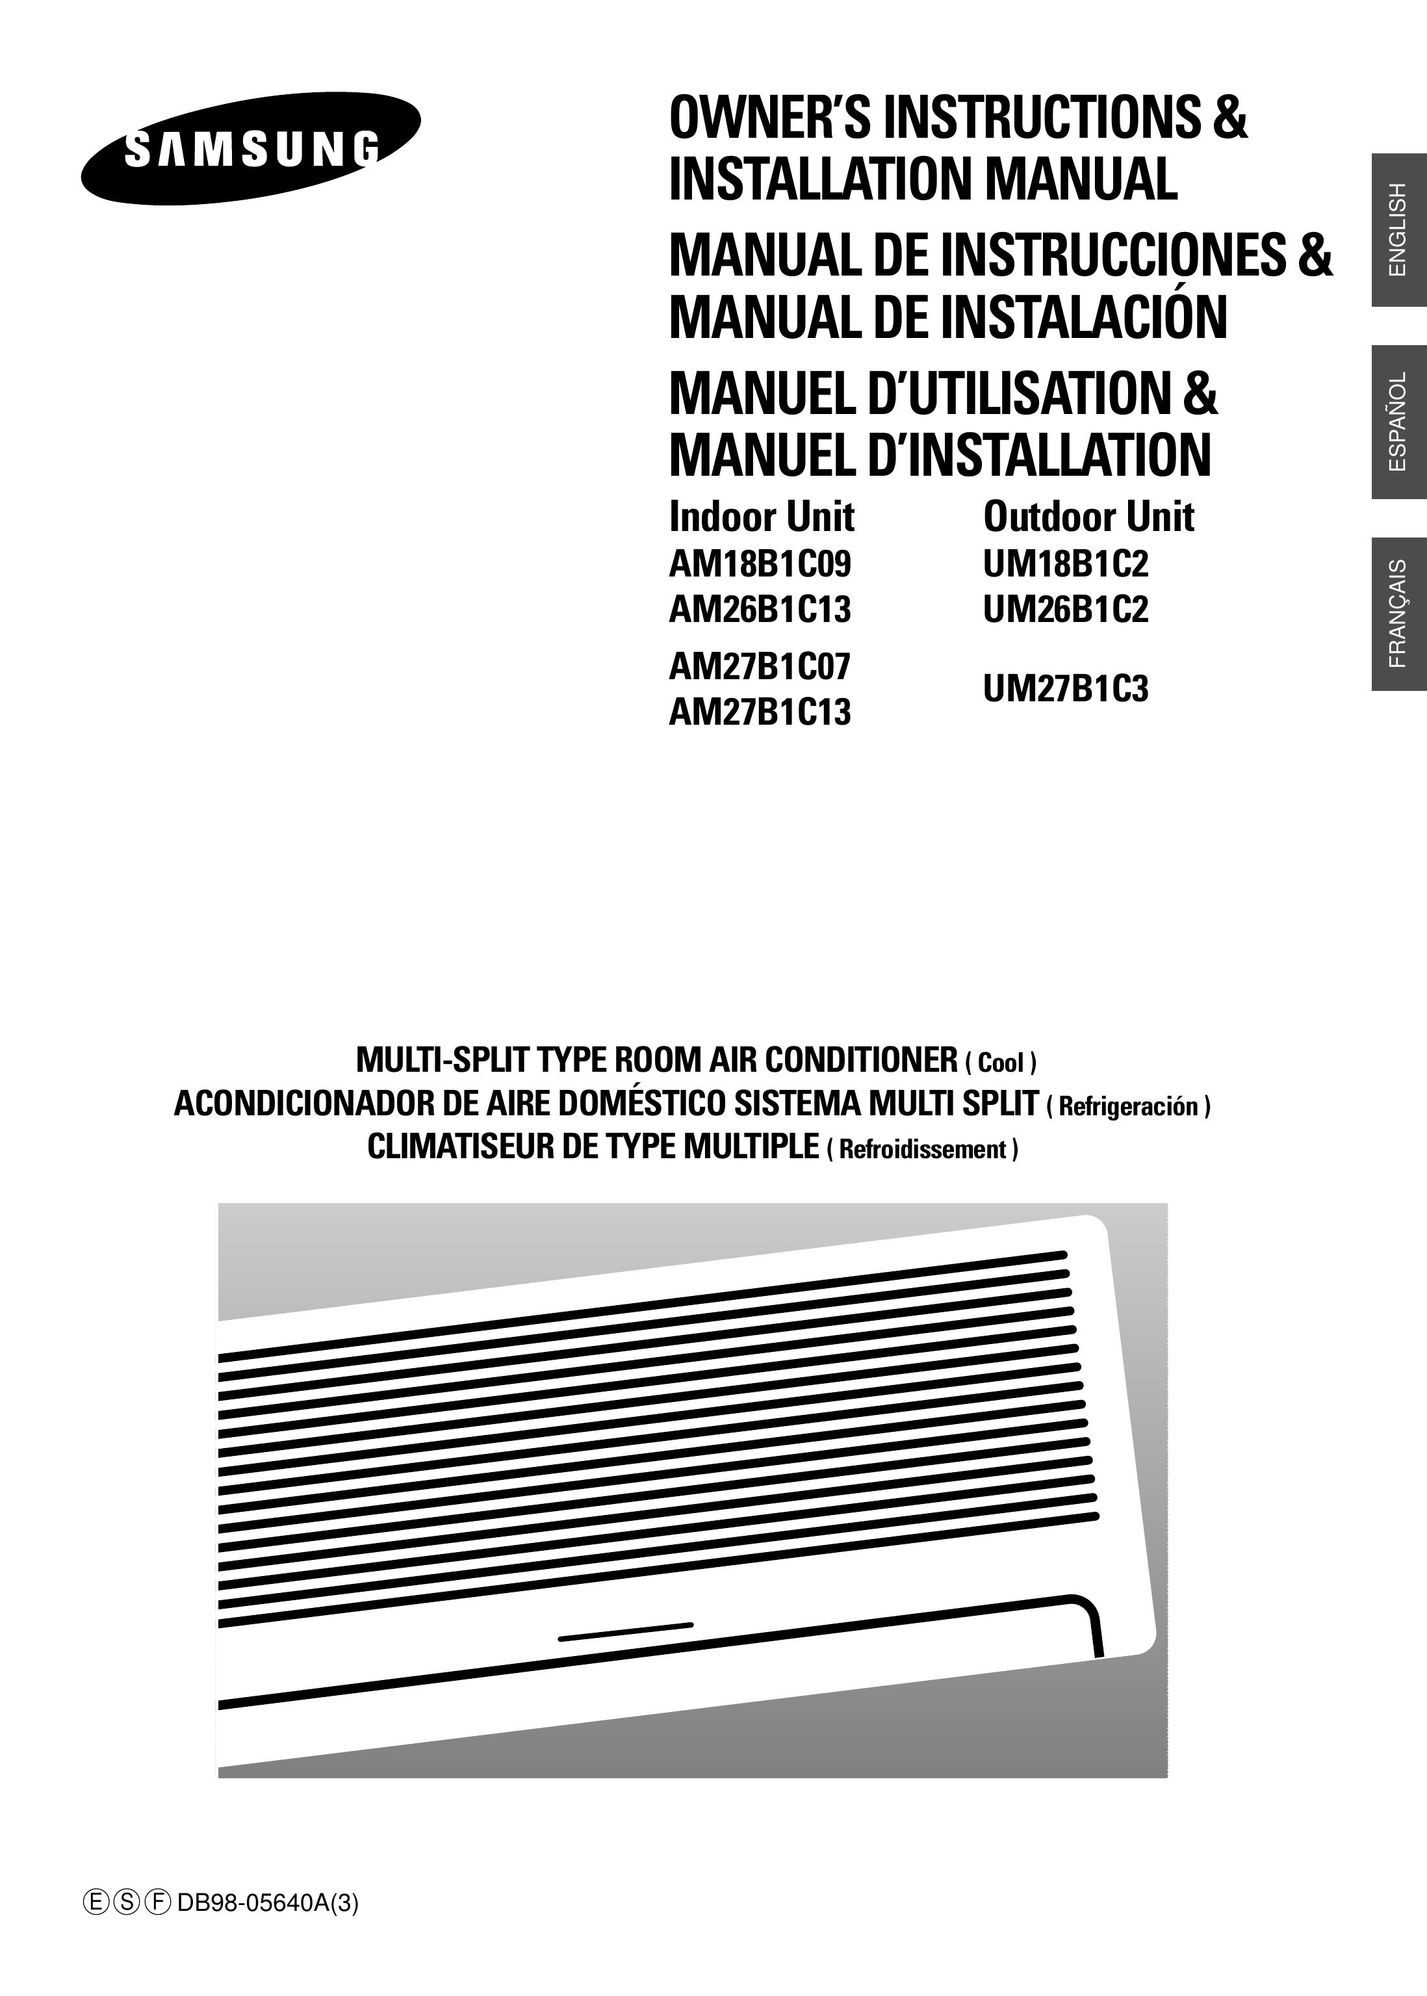 Samsung AM26B1C13 Air Conditioner User Manual